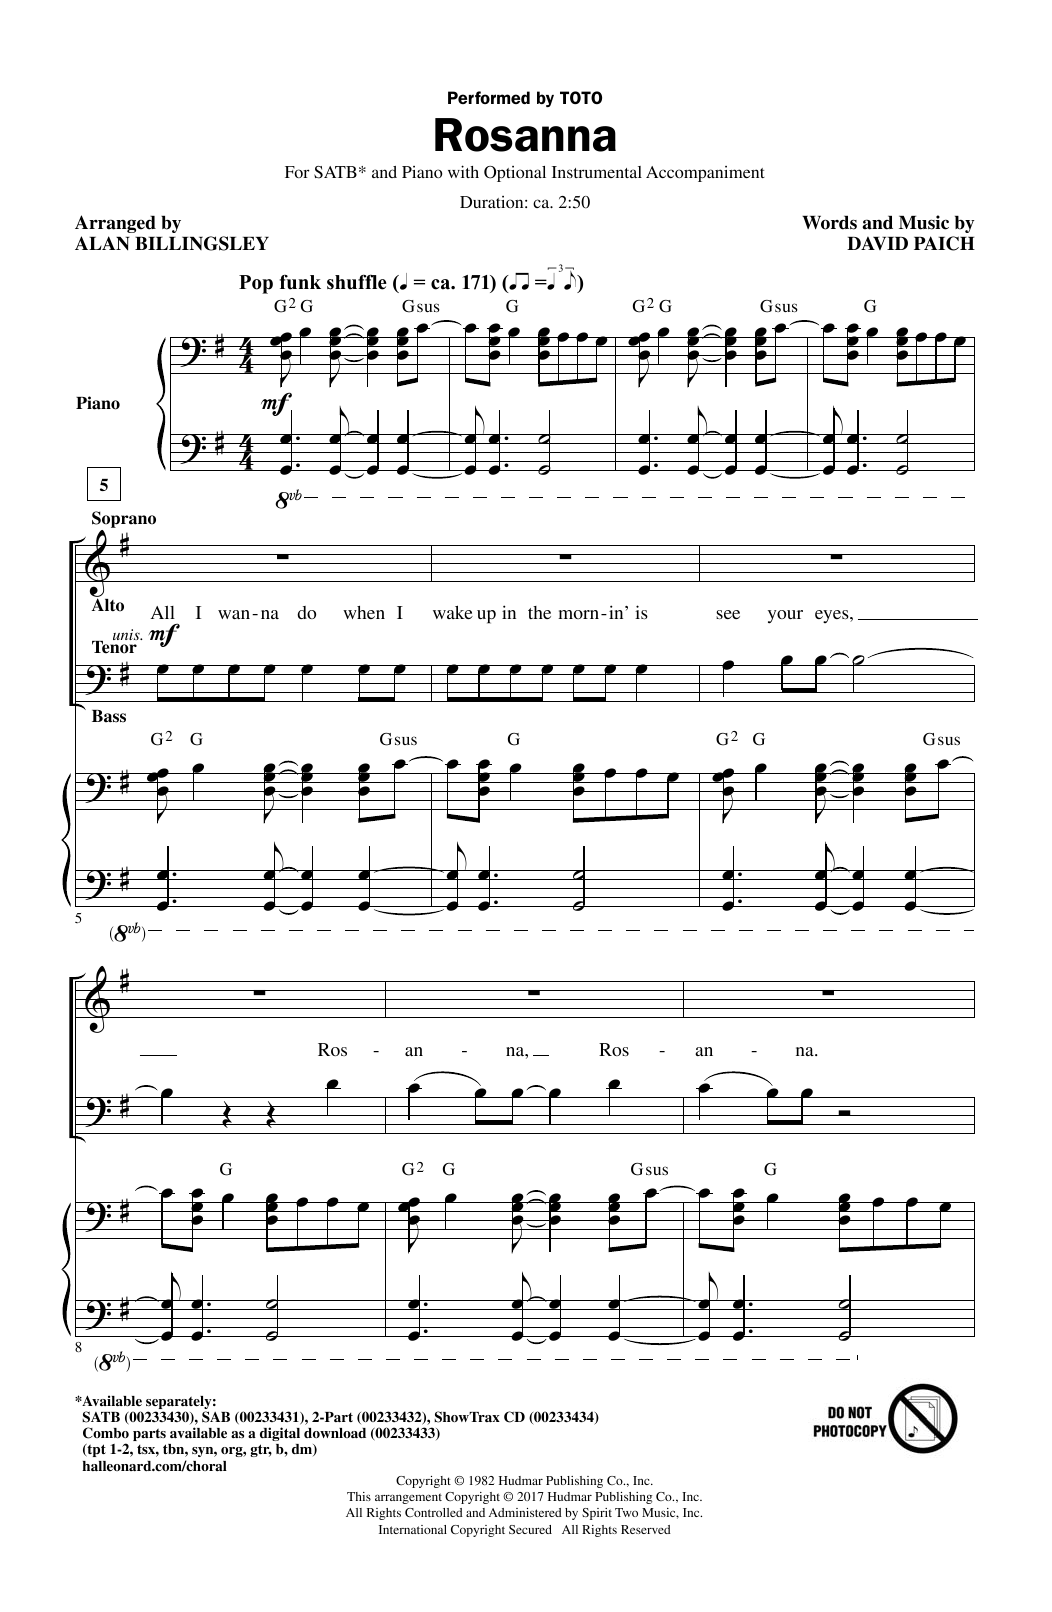 Toto Rosanna (arr. Alan Billingsley) Sheet Music Notes & Chords for SATB - Download or Print PDF